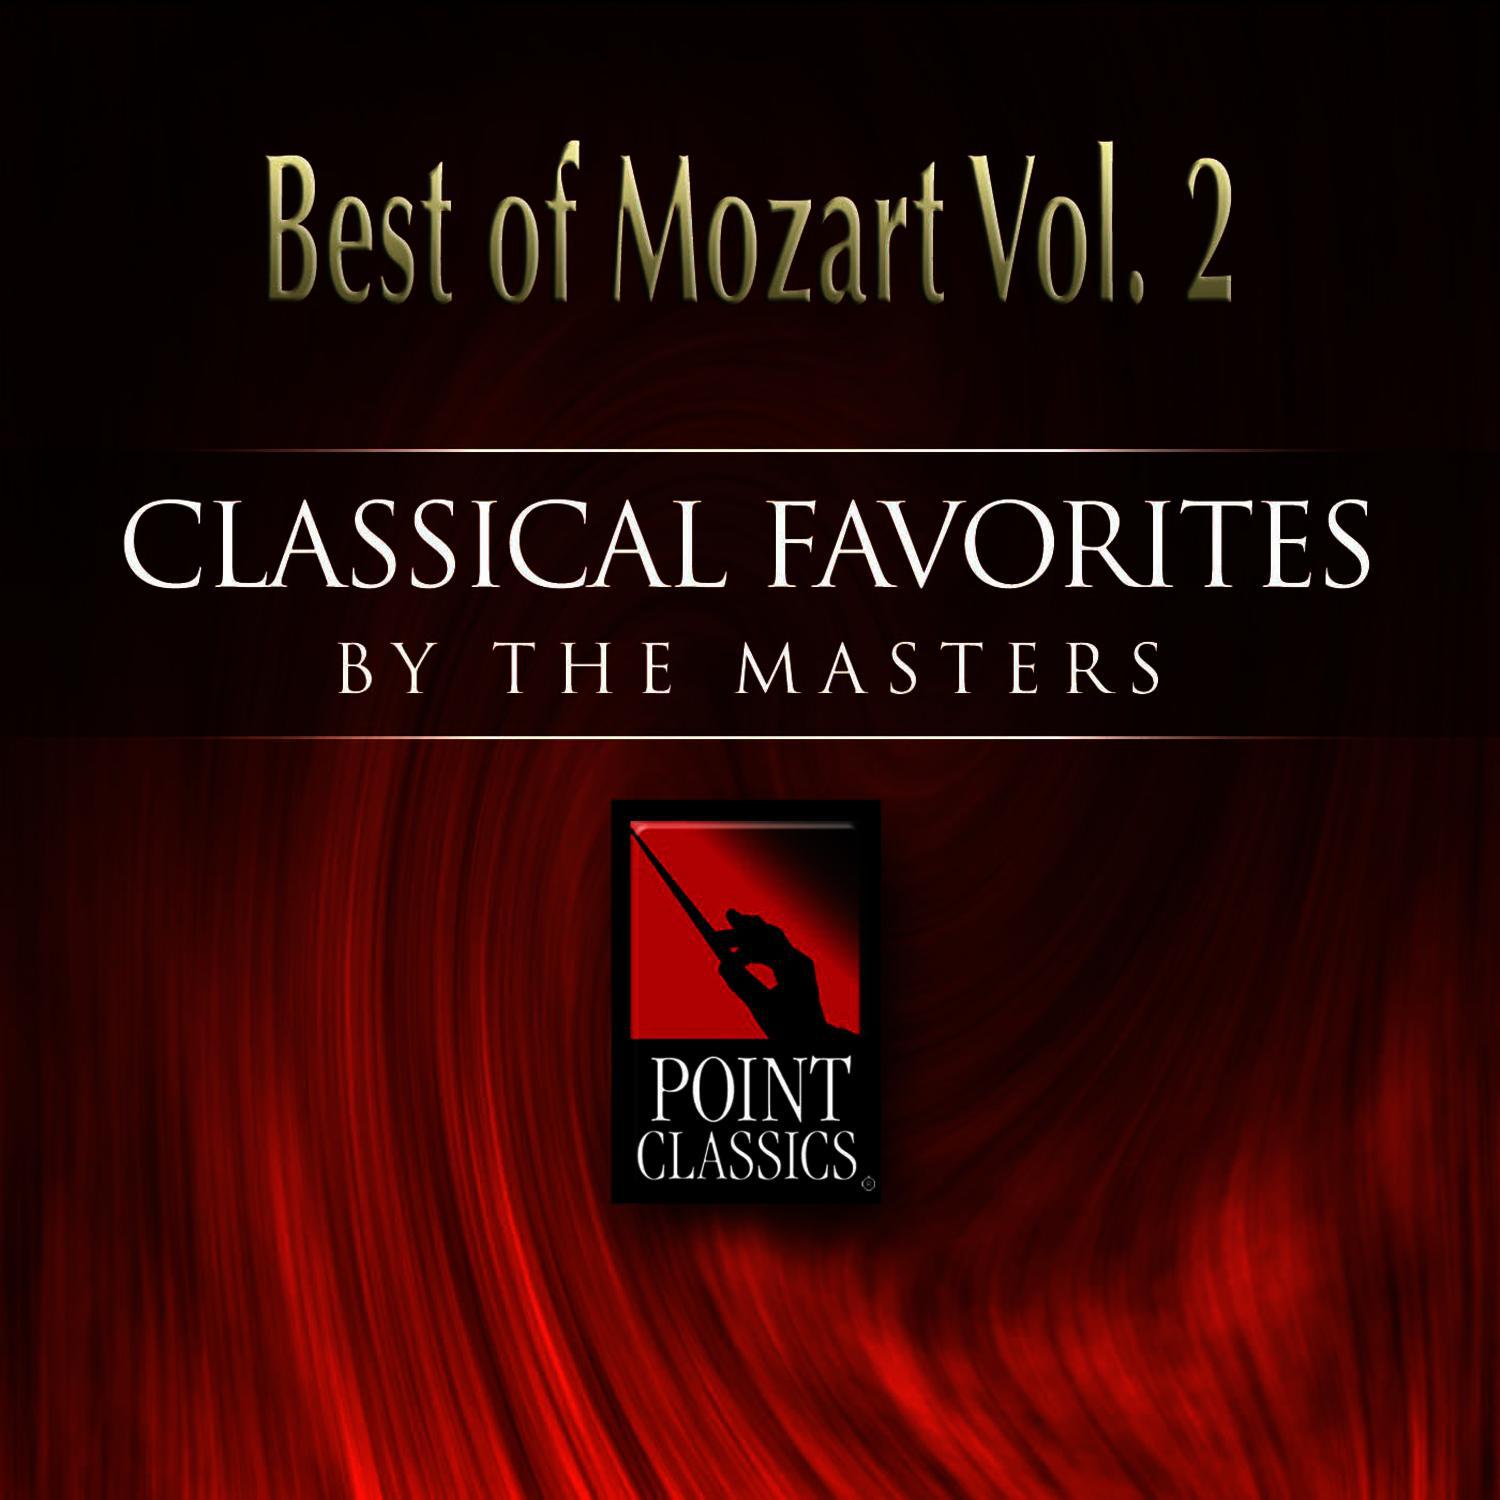 Best of Mozart Vol. 2